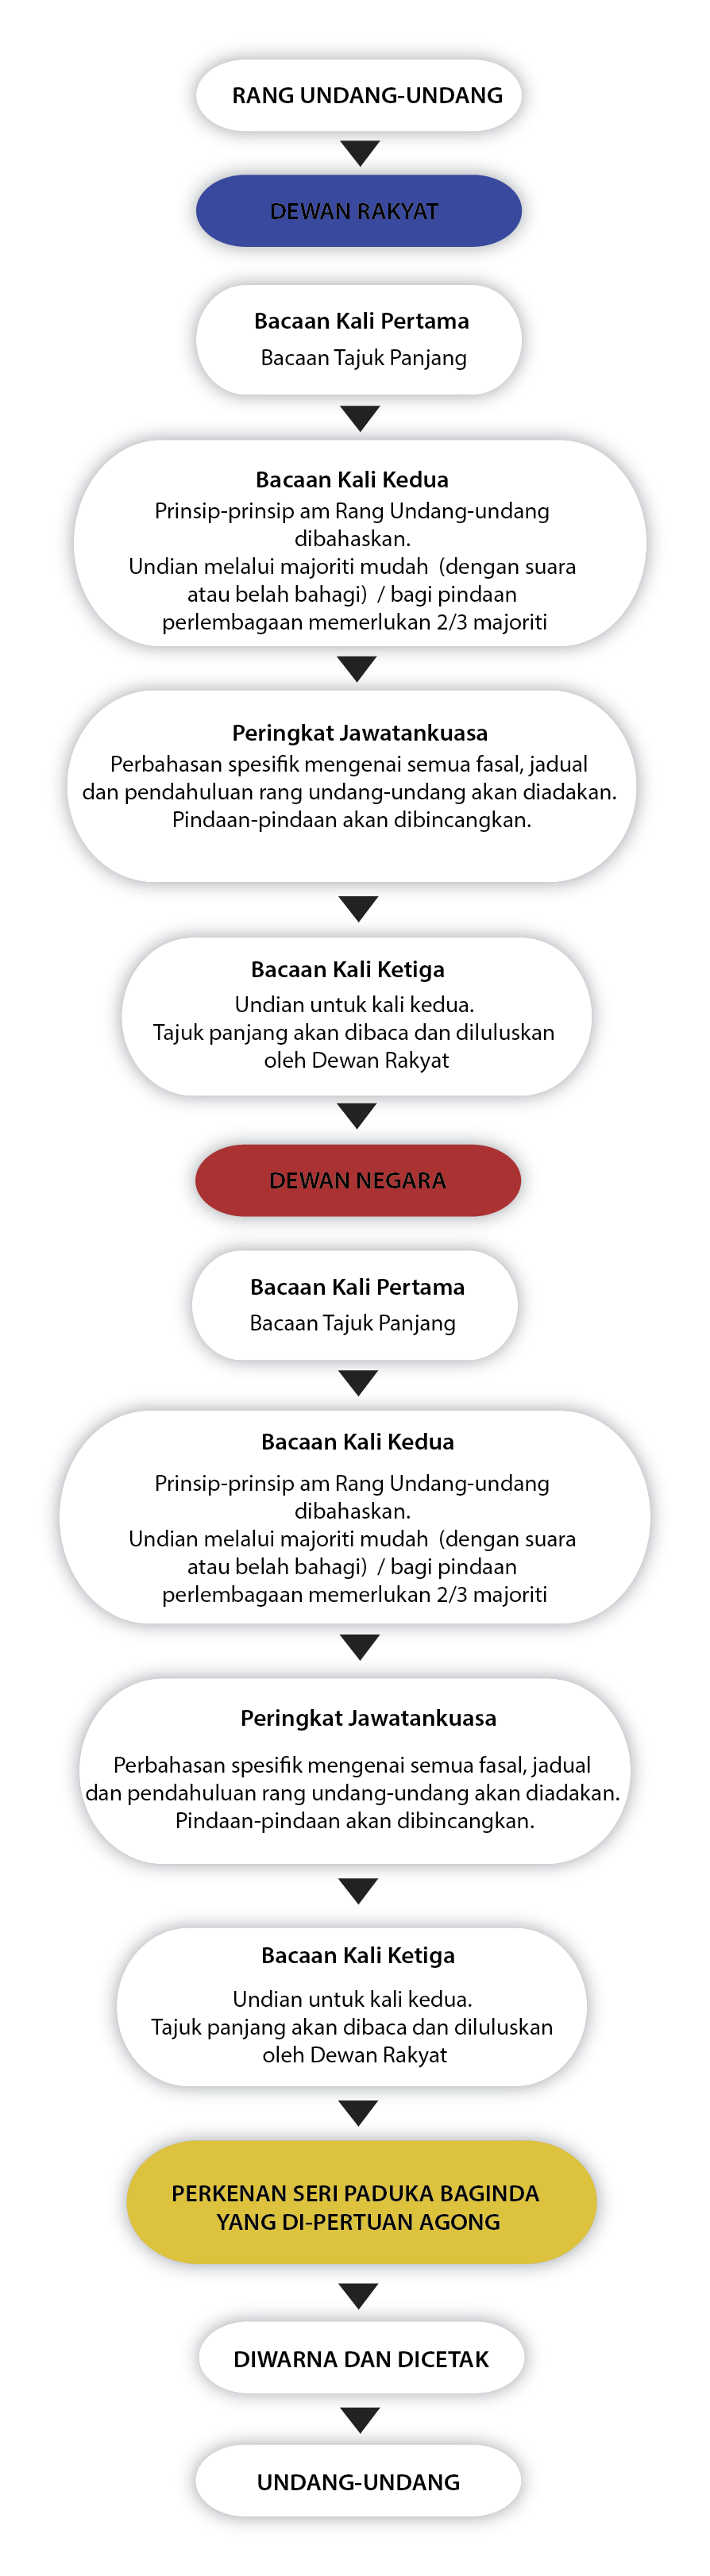 Malaysia peranan parlimen DEBAT BAHASA